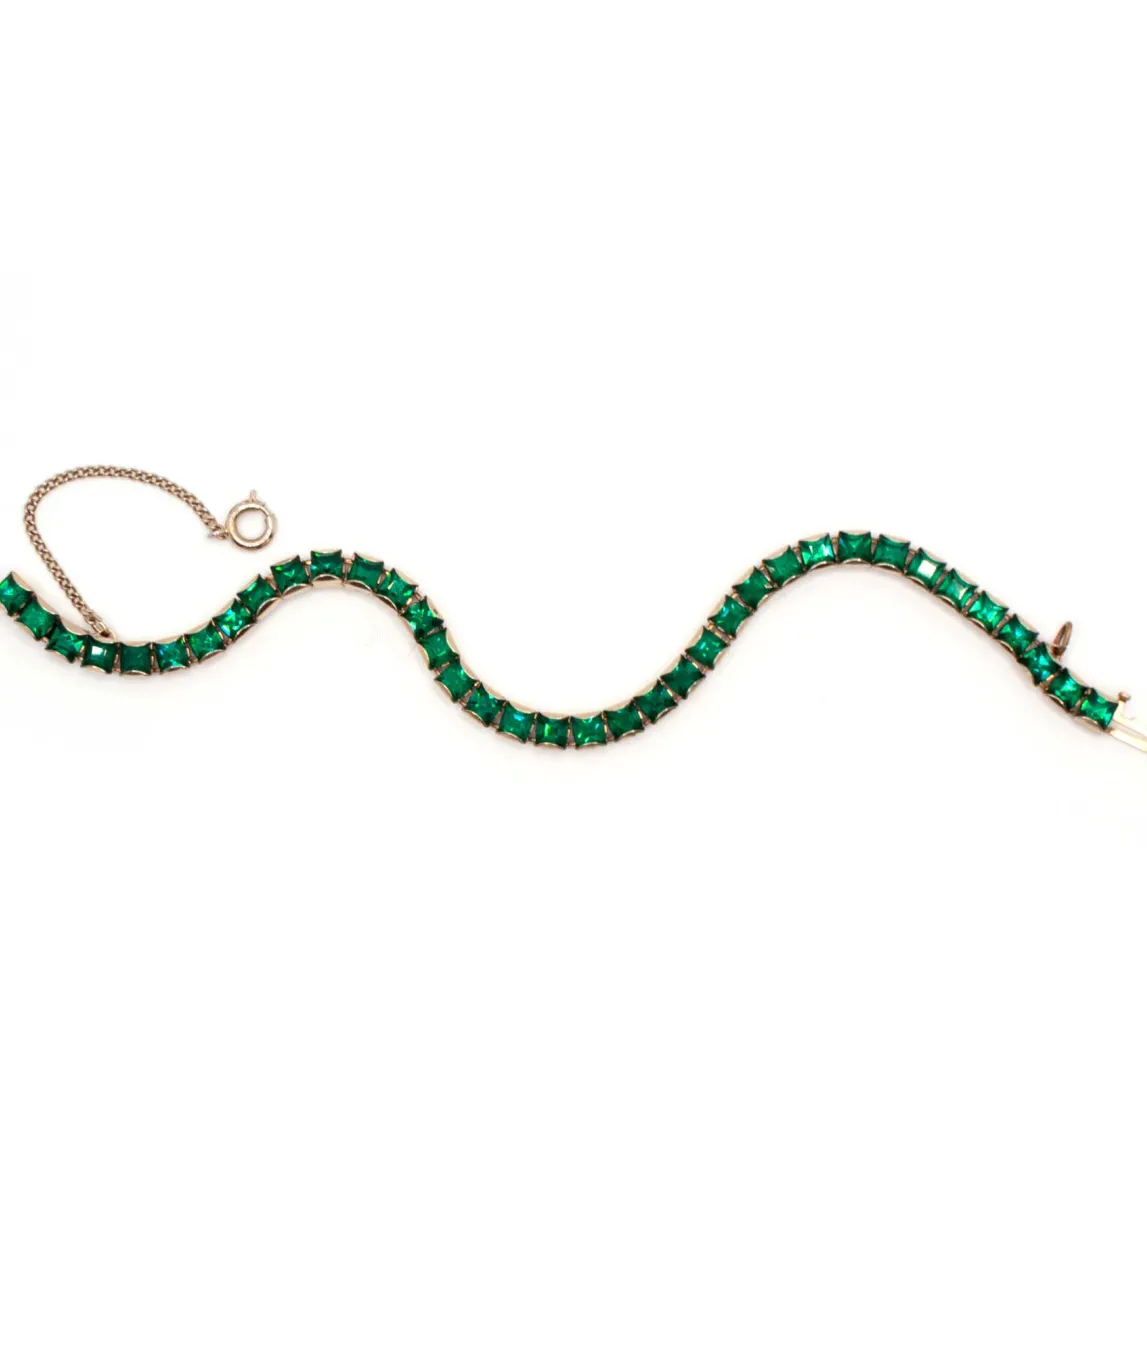 Vintage Weiss emerald green tennis bracelet